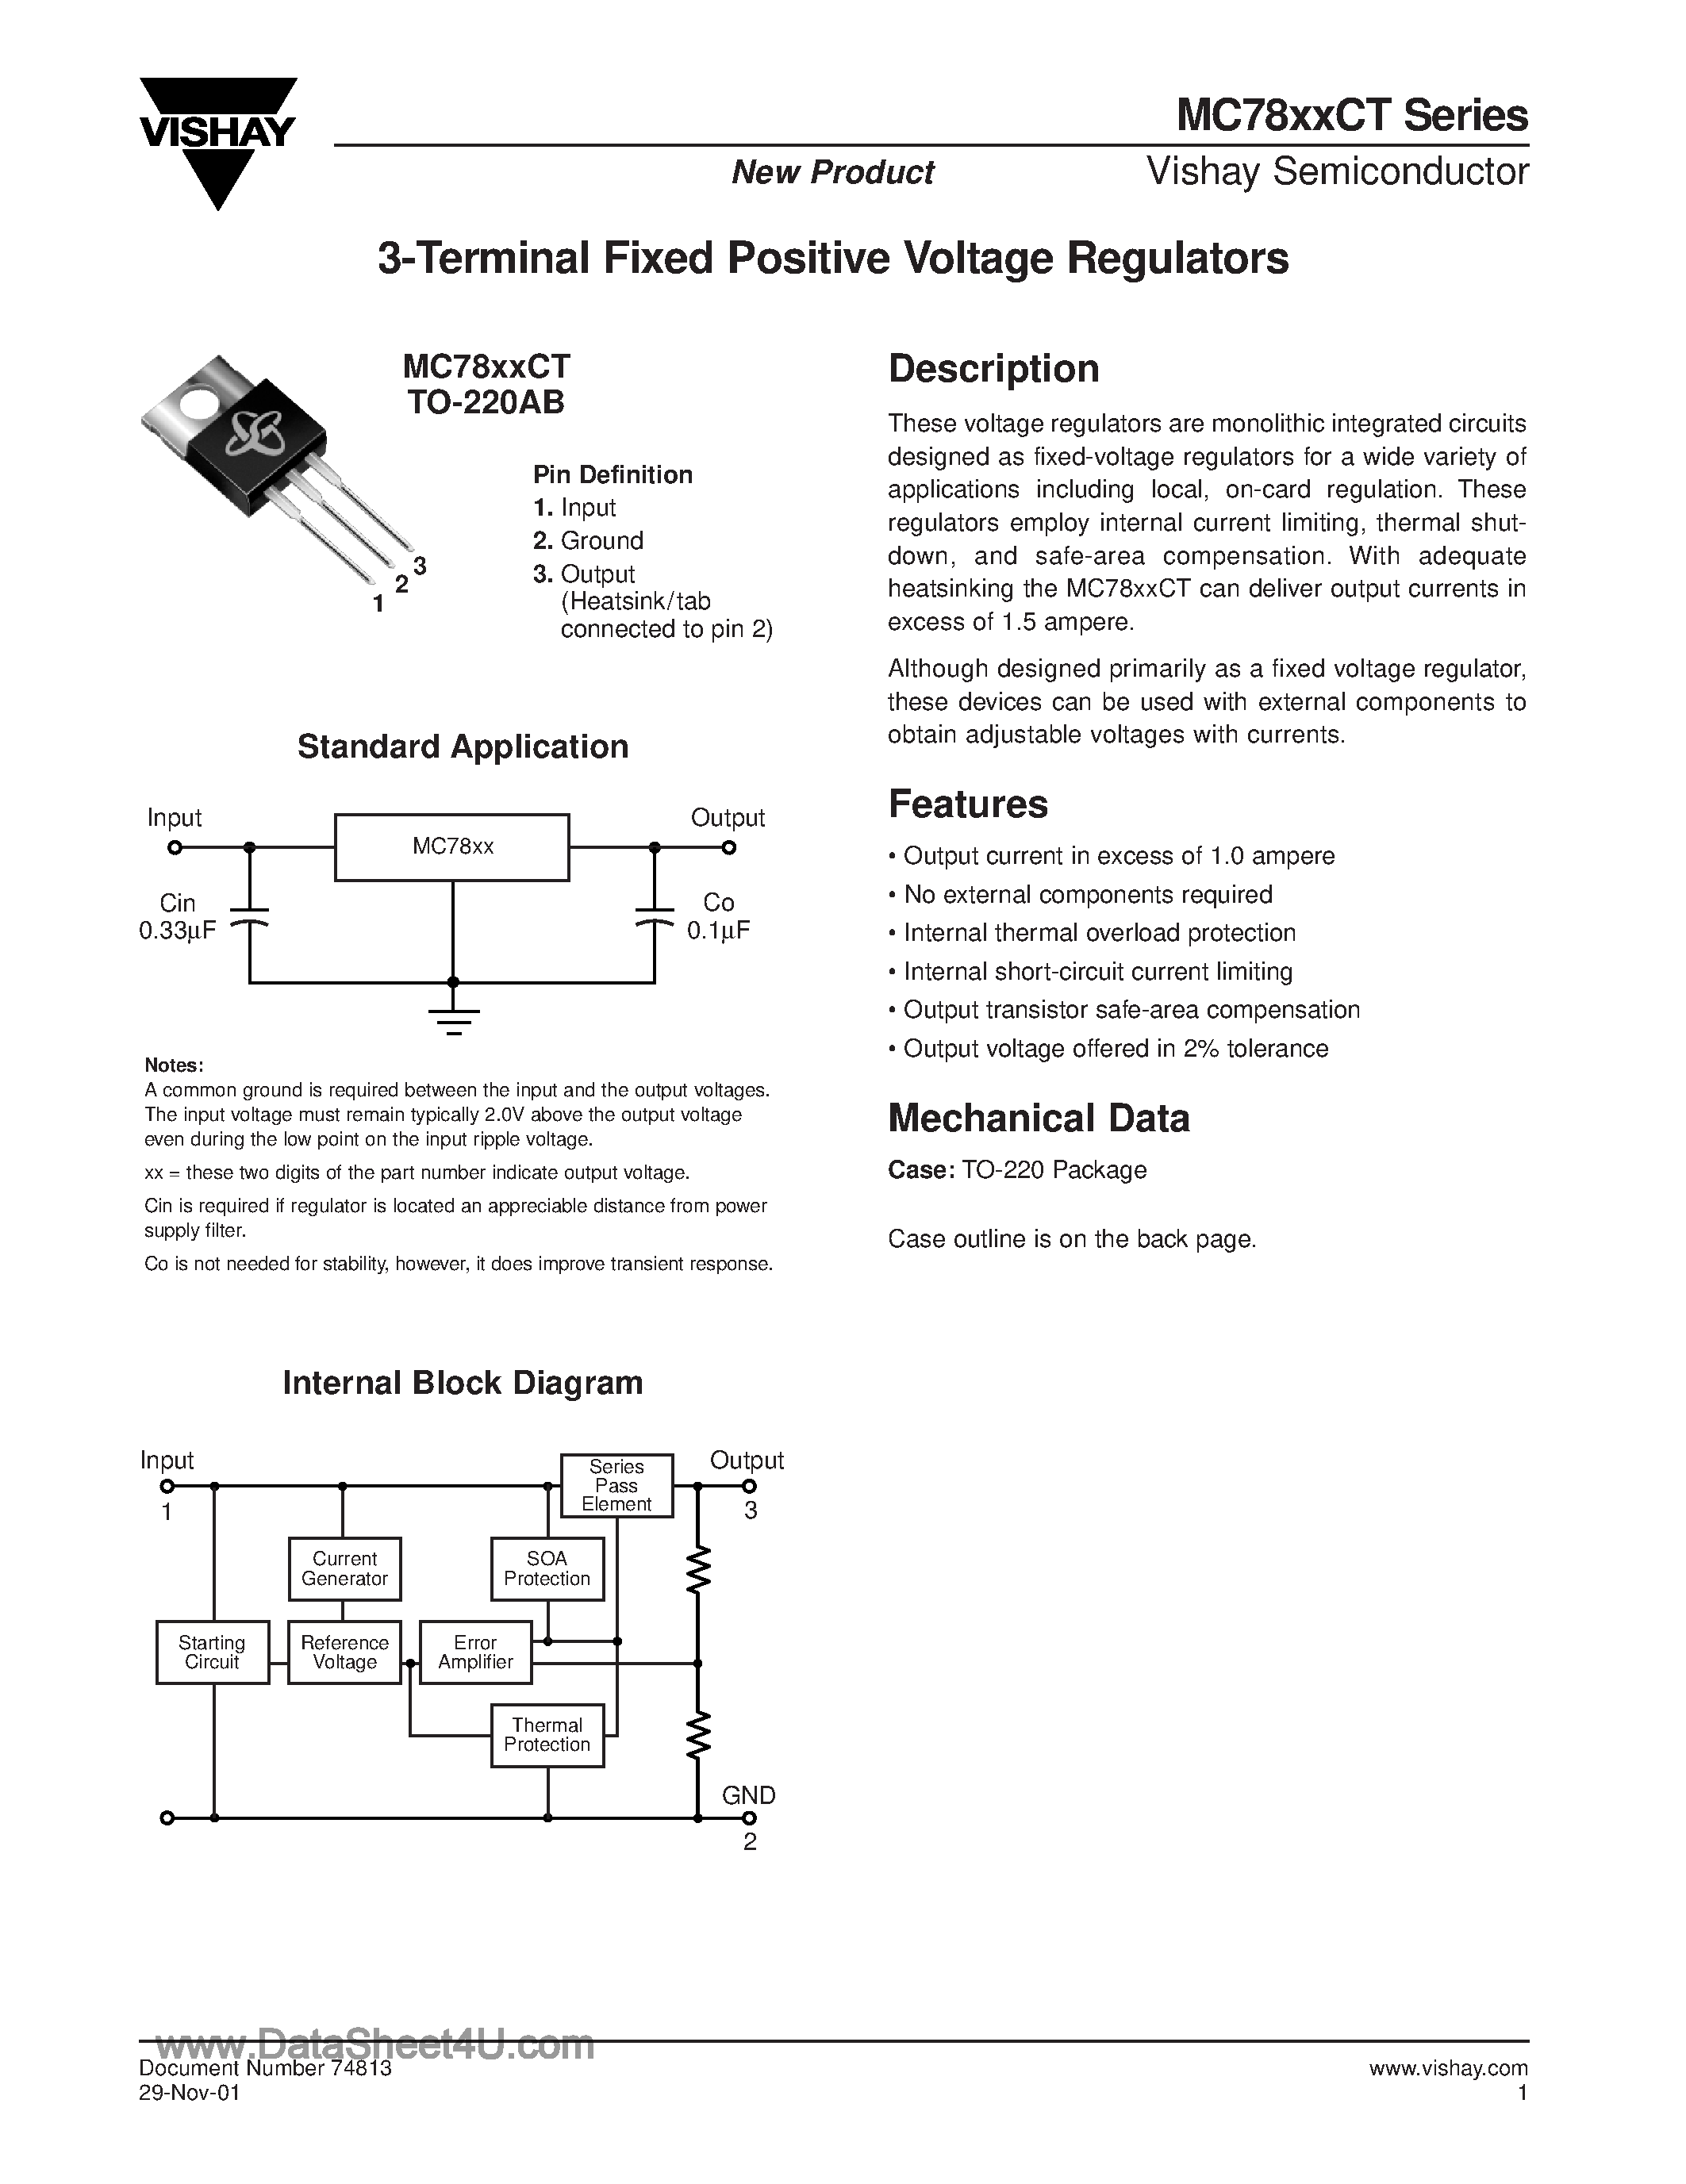 Datasheet MC7812CT - (MC78xxCT) 3-Terminal Fixed Positive Voltage Regulator page 1